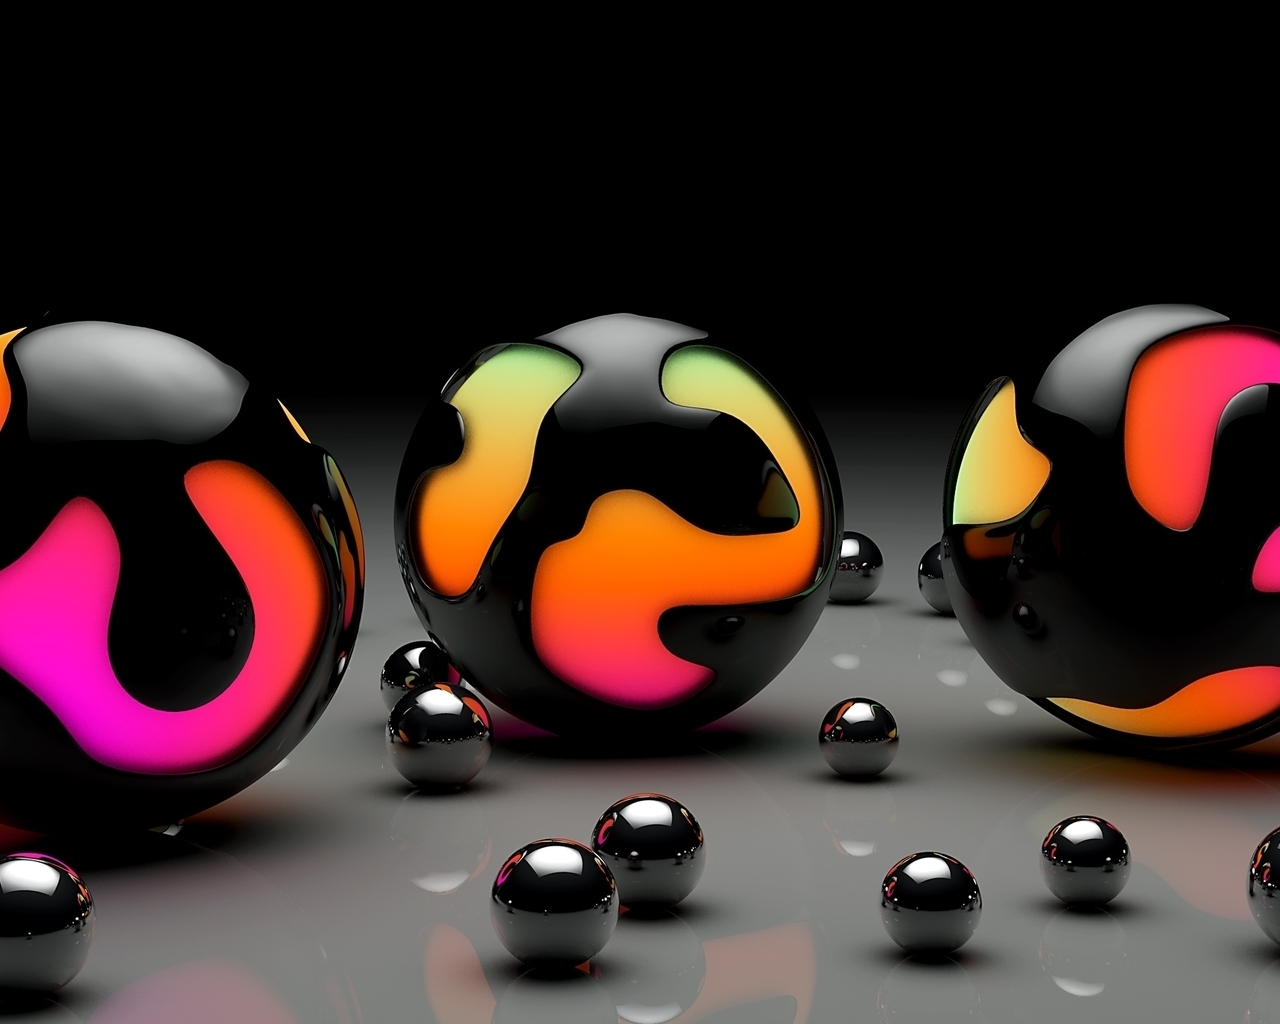 Balls Design for 1280 x 1024 resolution